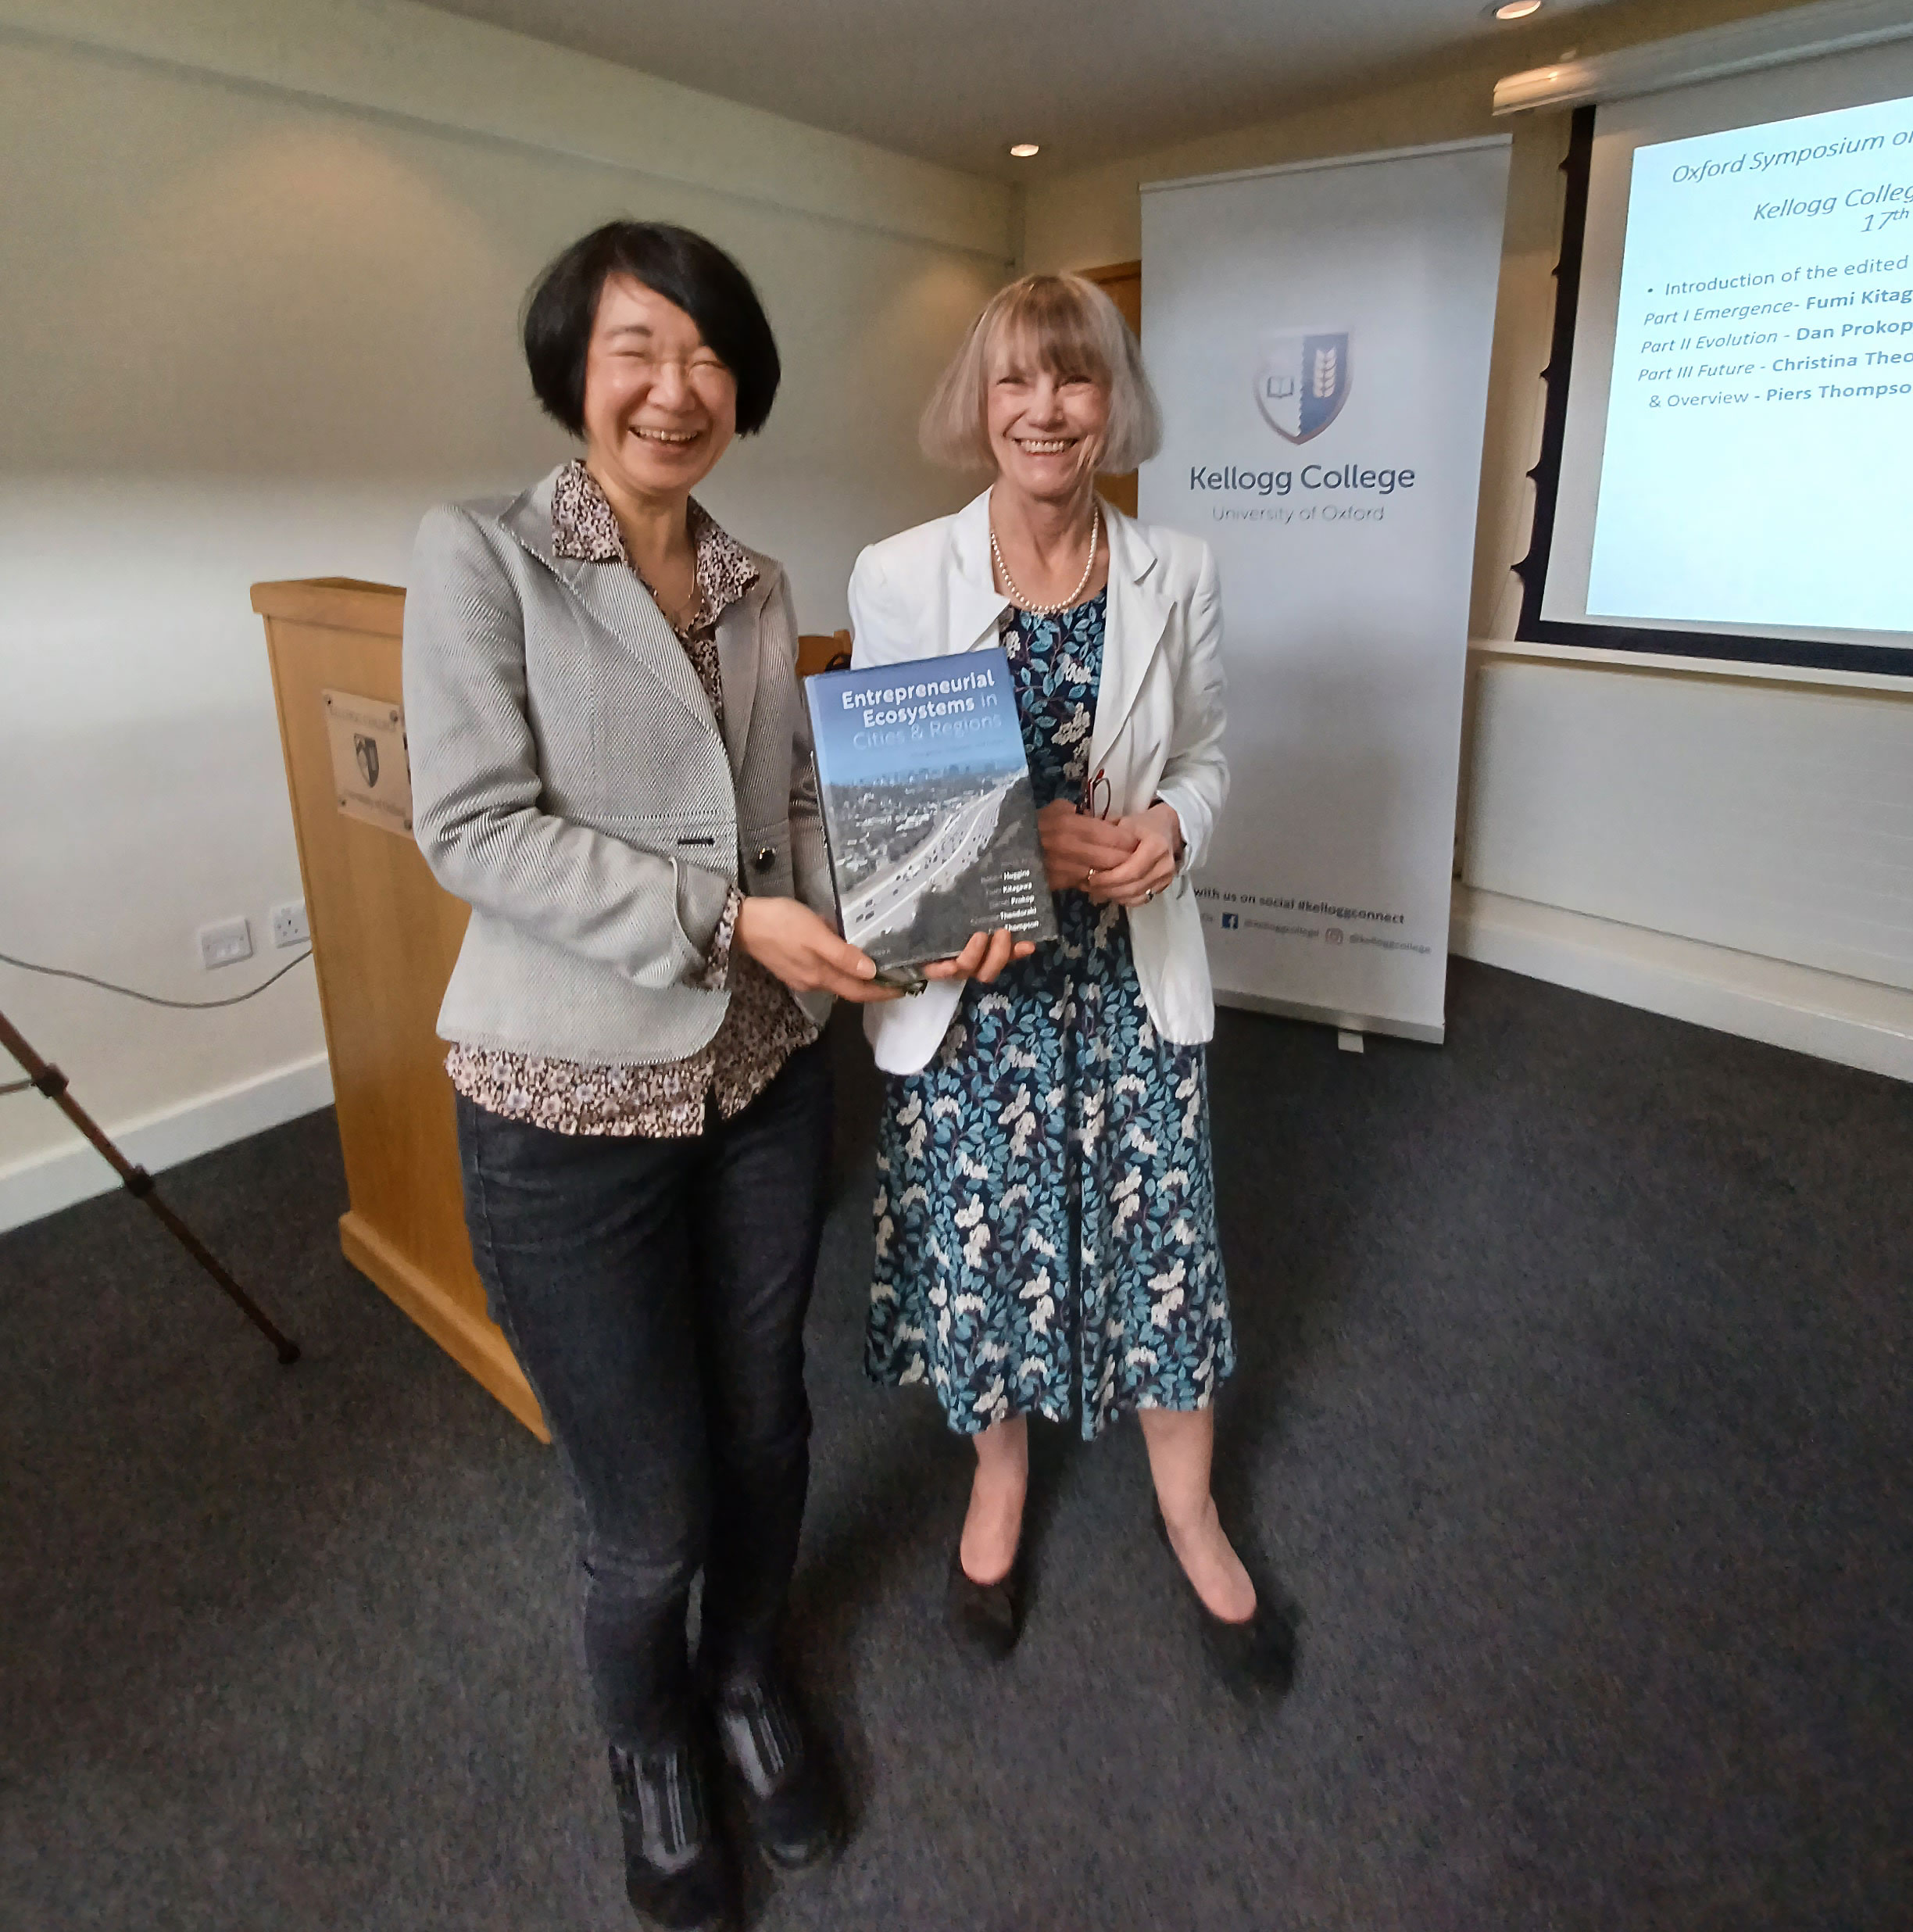 Helen Lawton Smith and Fumi Kitagawa at their book launch